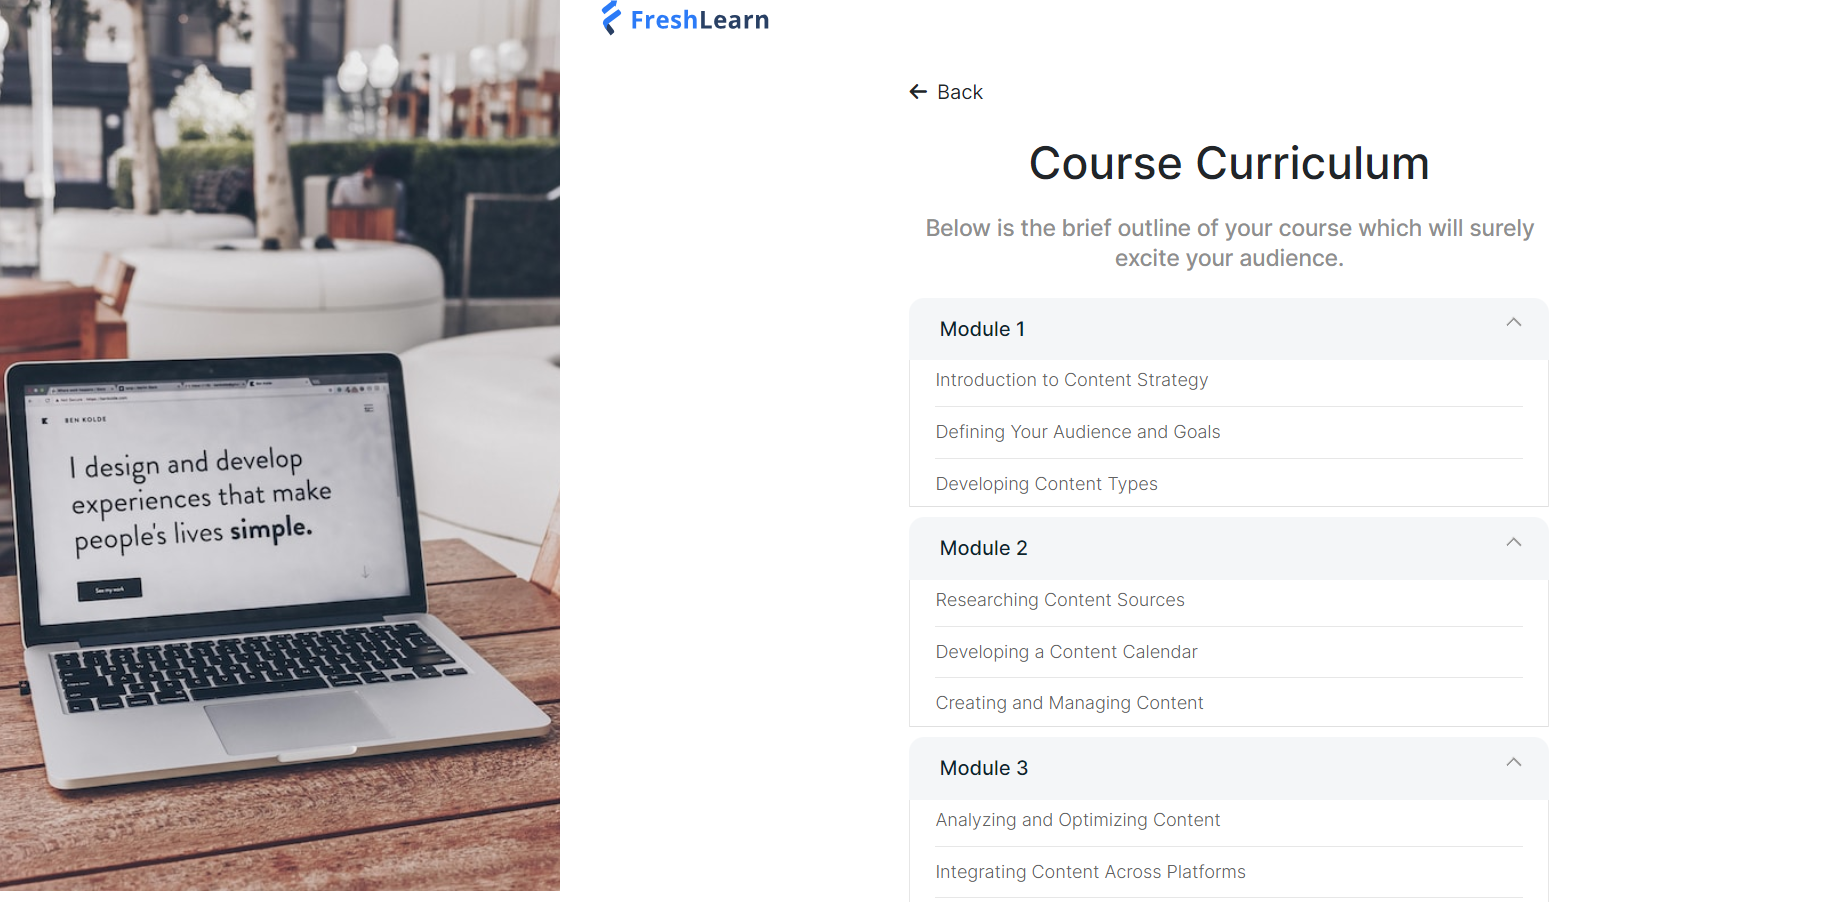 Course Curriculum